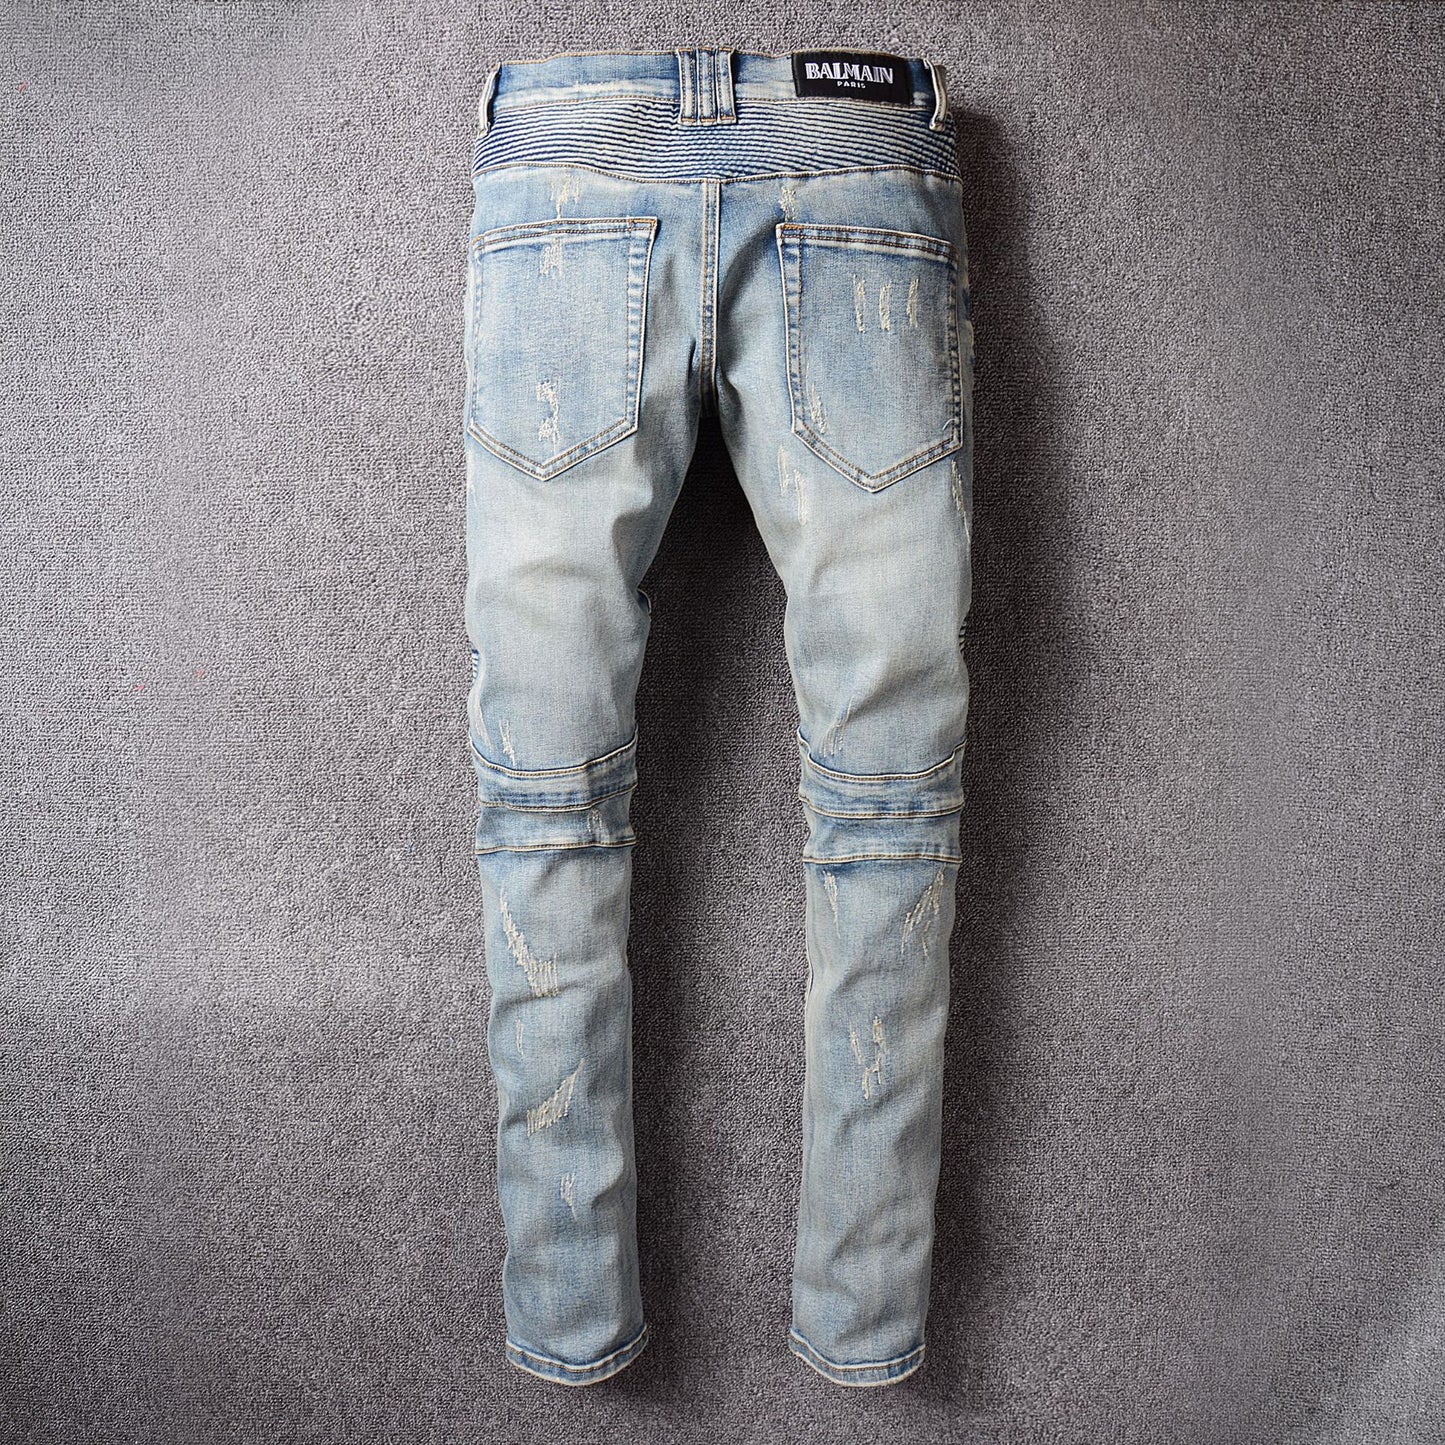 Europen france brand Men's denim trousers jeans pants Slim Straight gentleman jeans blue stripe jeans pants for men 979 - LiveTrendsX